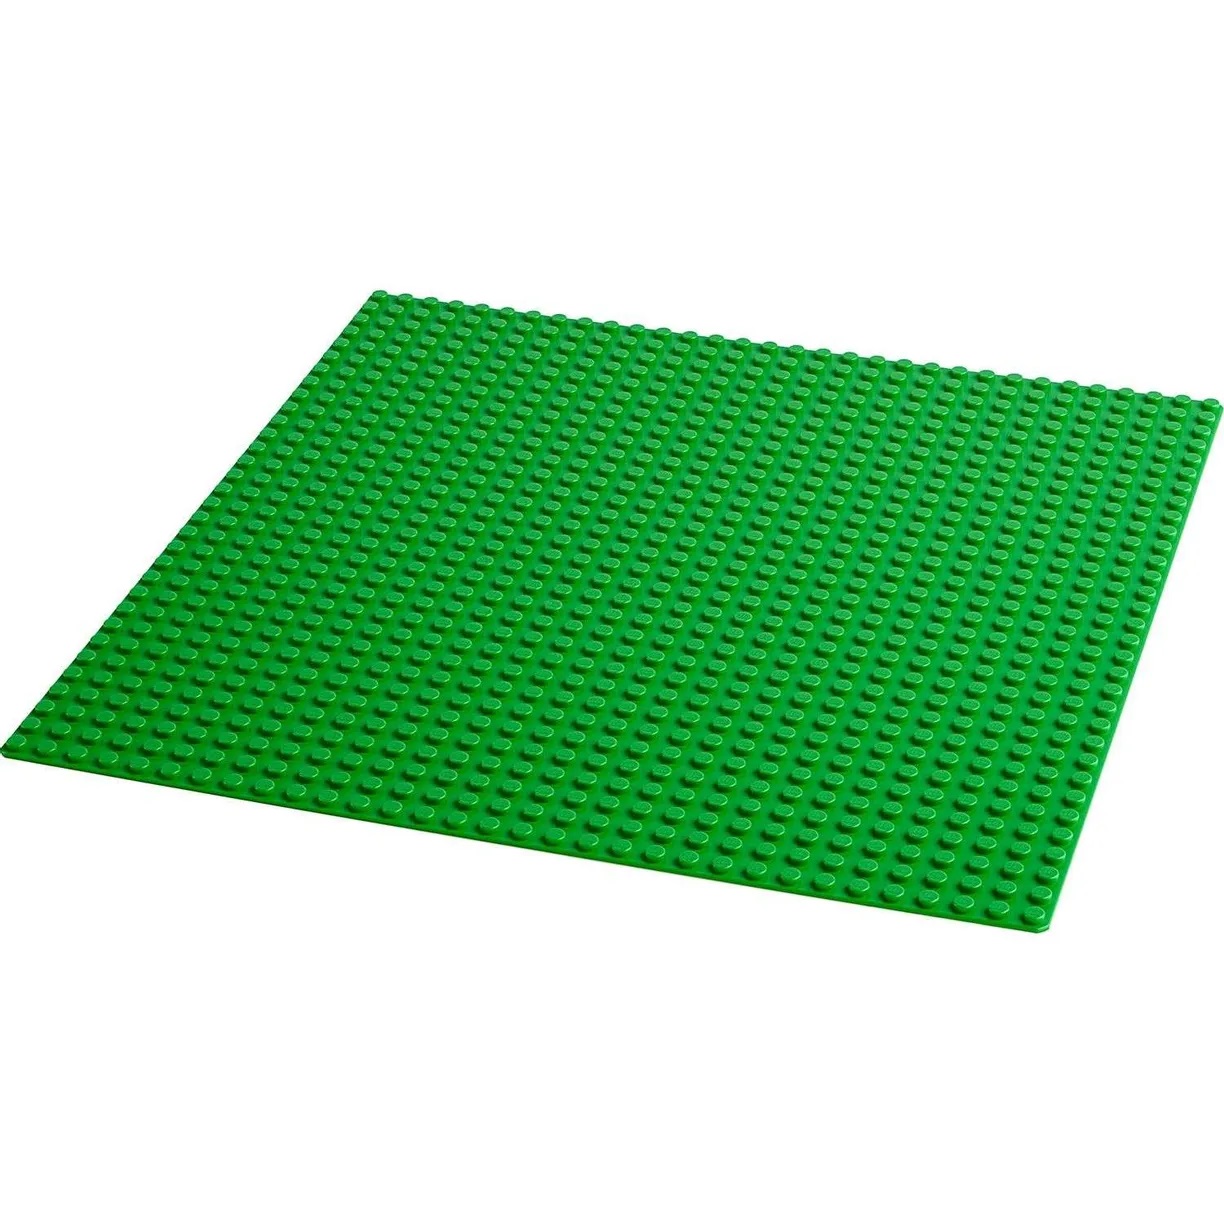 Lego Classic 11023 Строительная пластина зеленого цвета 32x32